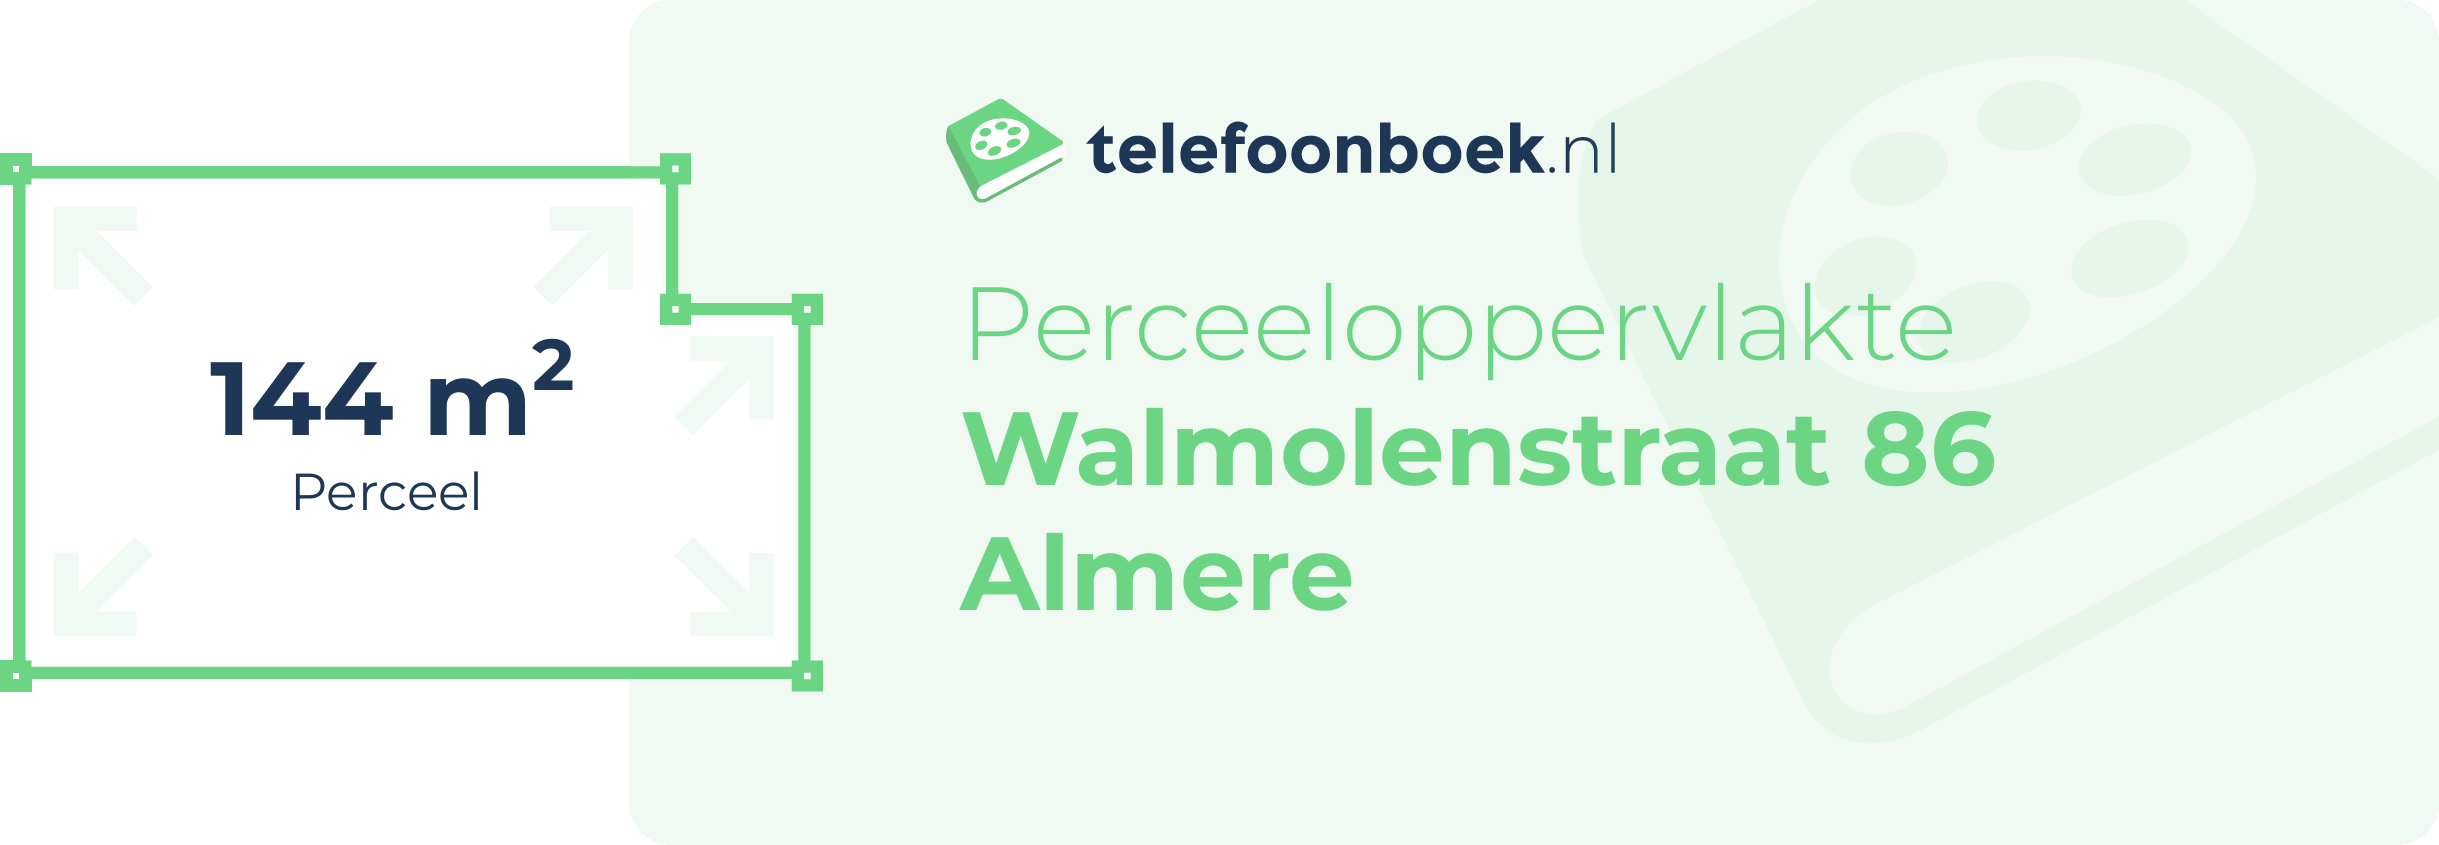 Perceeloppervlakte Walmolenstraat 86 Almere